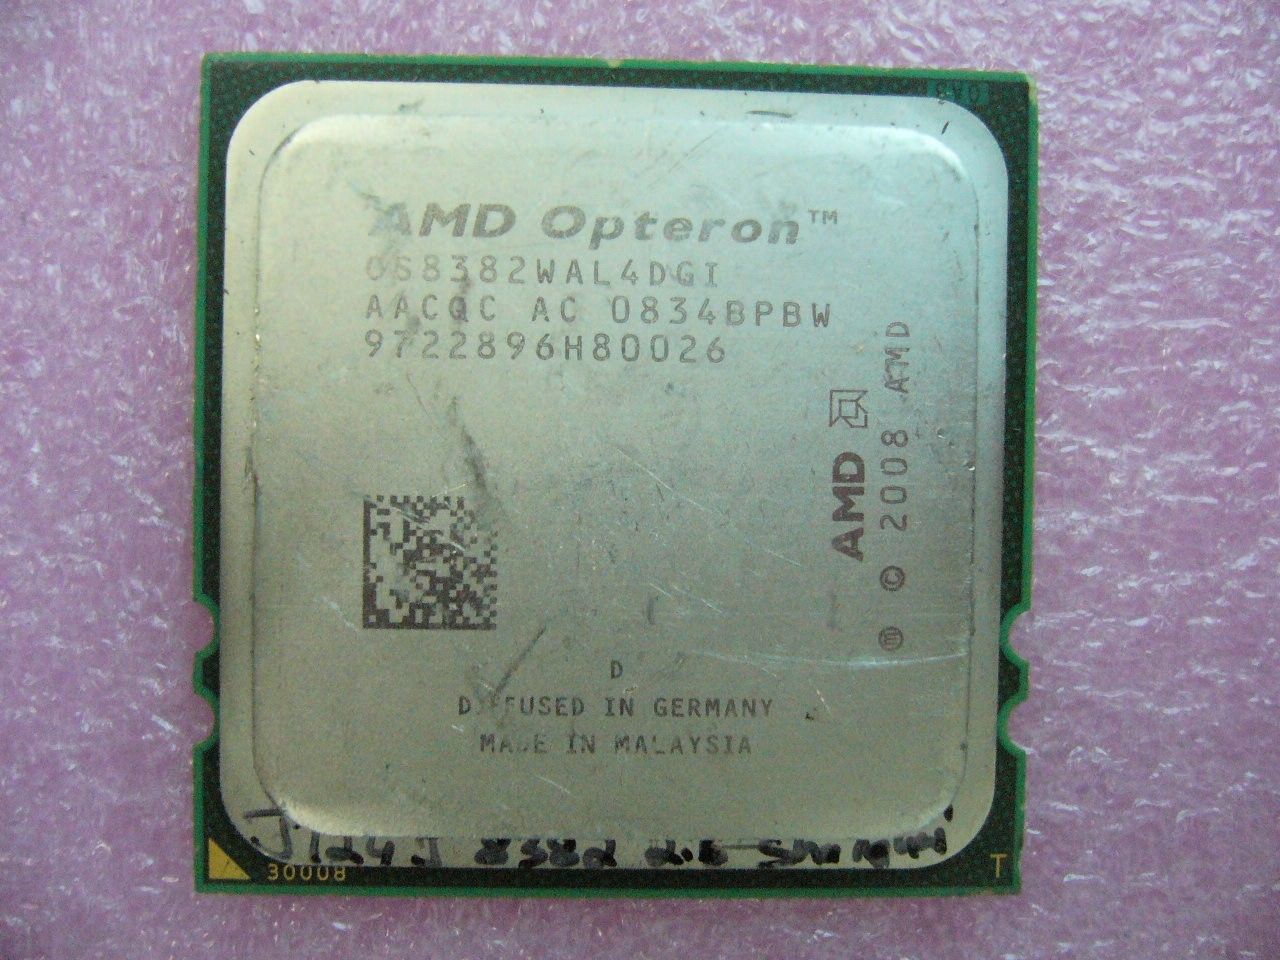 QTY 1x AMD Opteron 8382 2.6 GHz Quad-Core (OS8382WAL4DGI) CPU Socket F 1207 - Click Image to Close